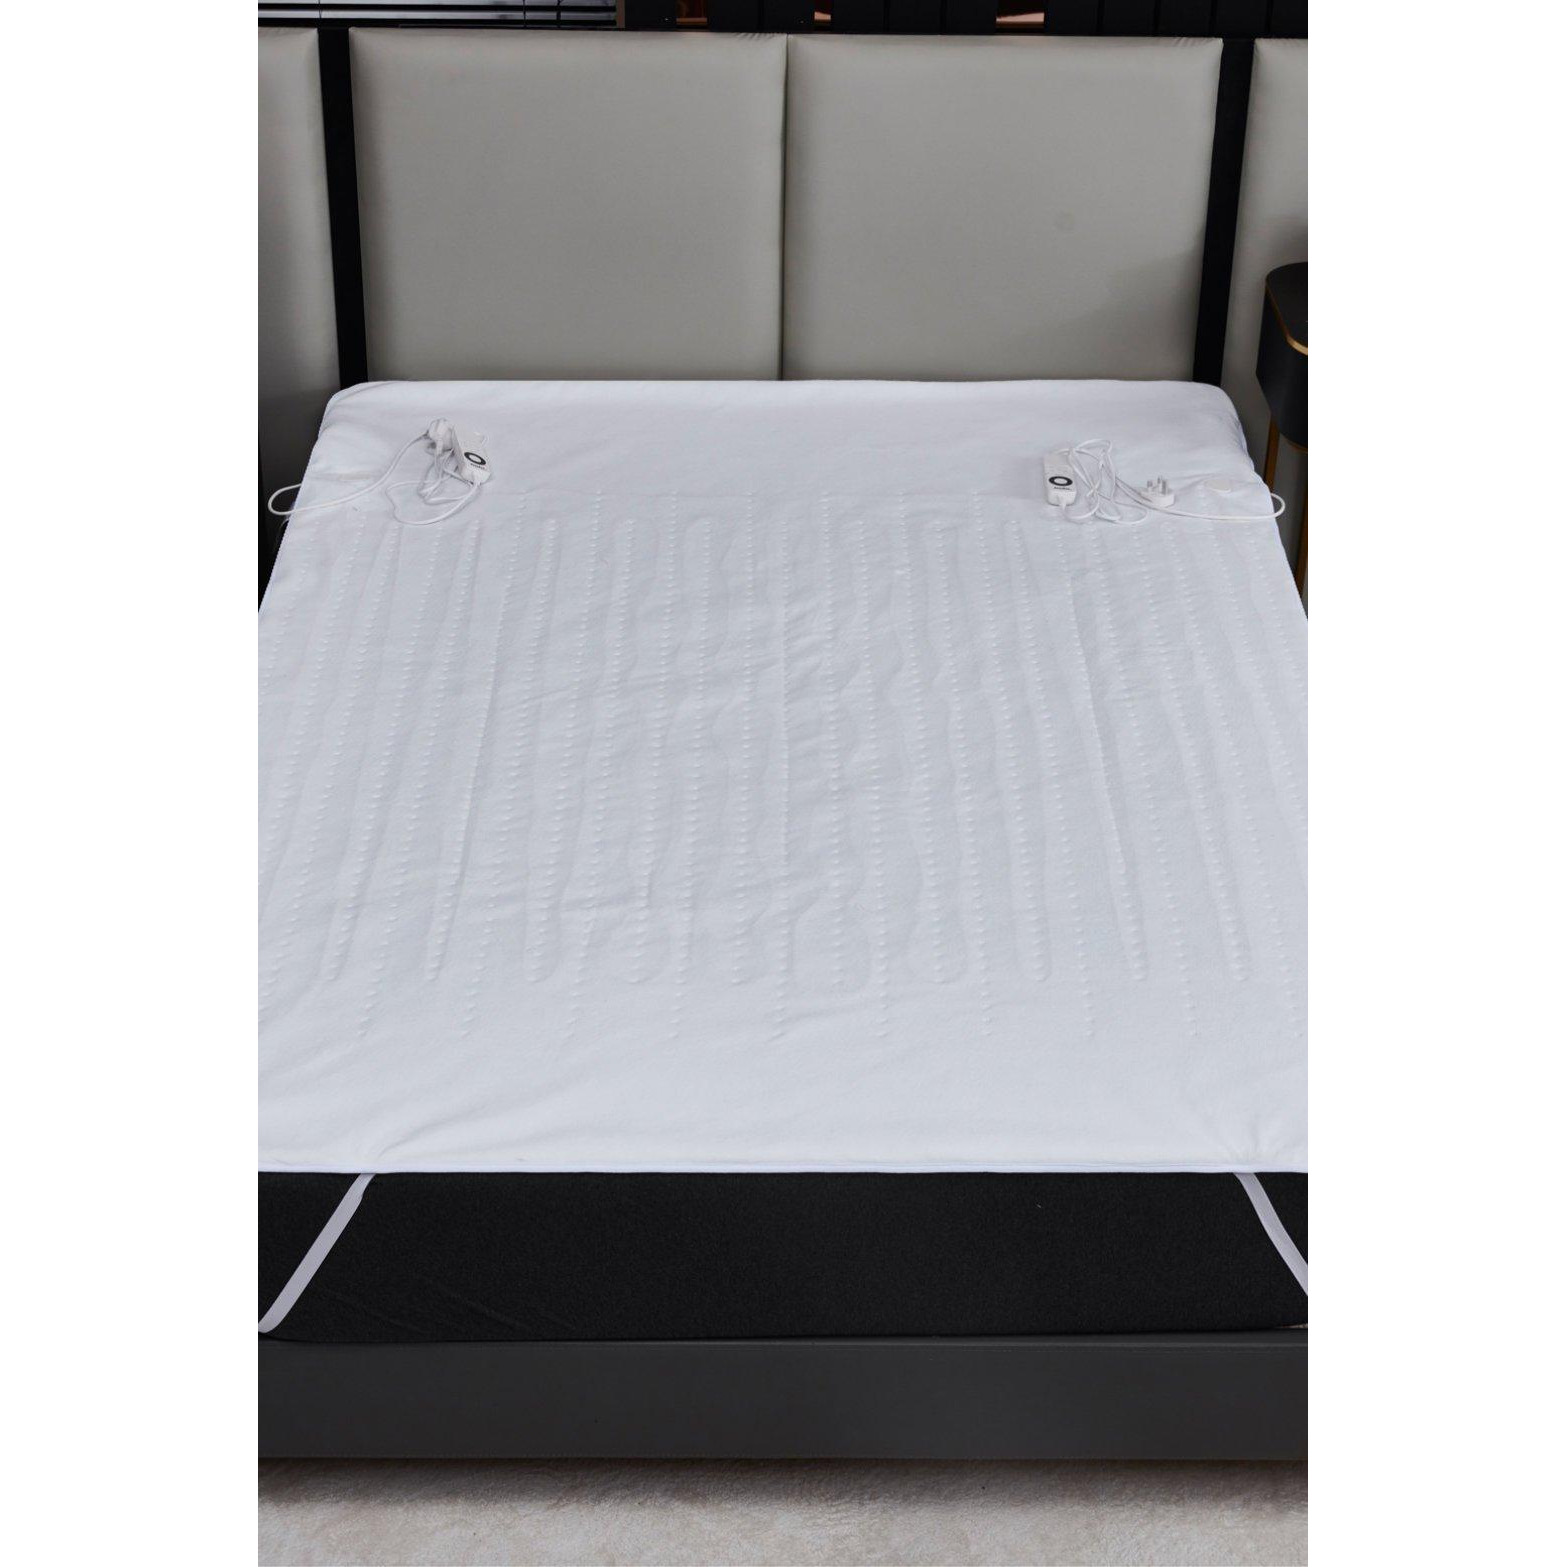 Premium Fleece Top Dual Control Heated Electric Blanket - image 1